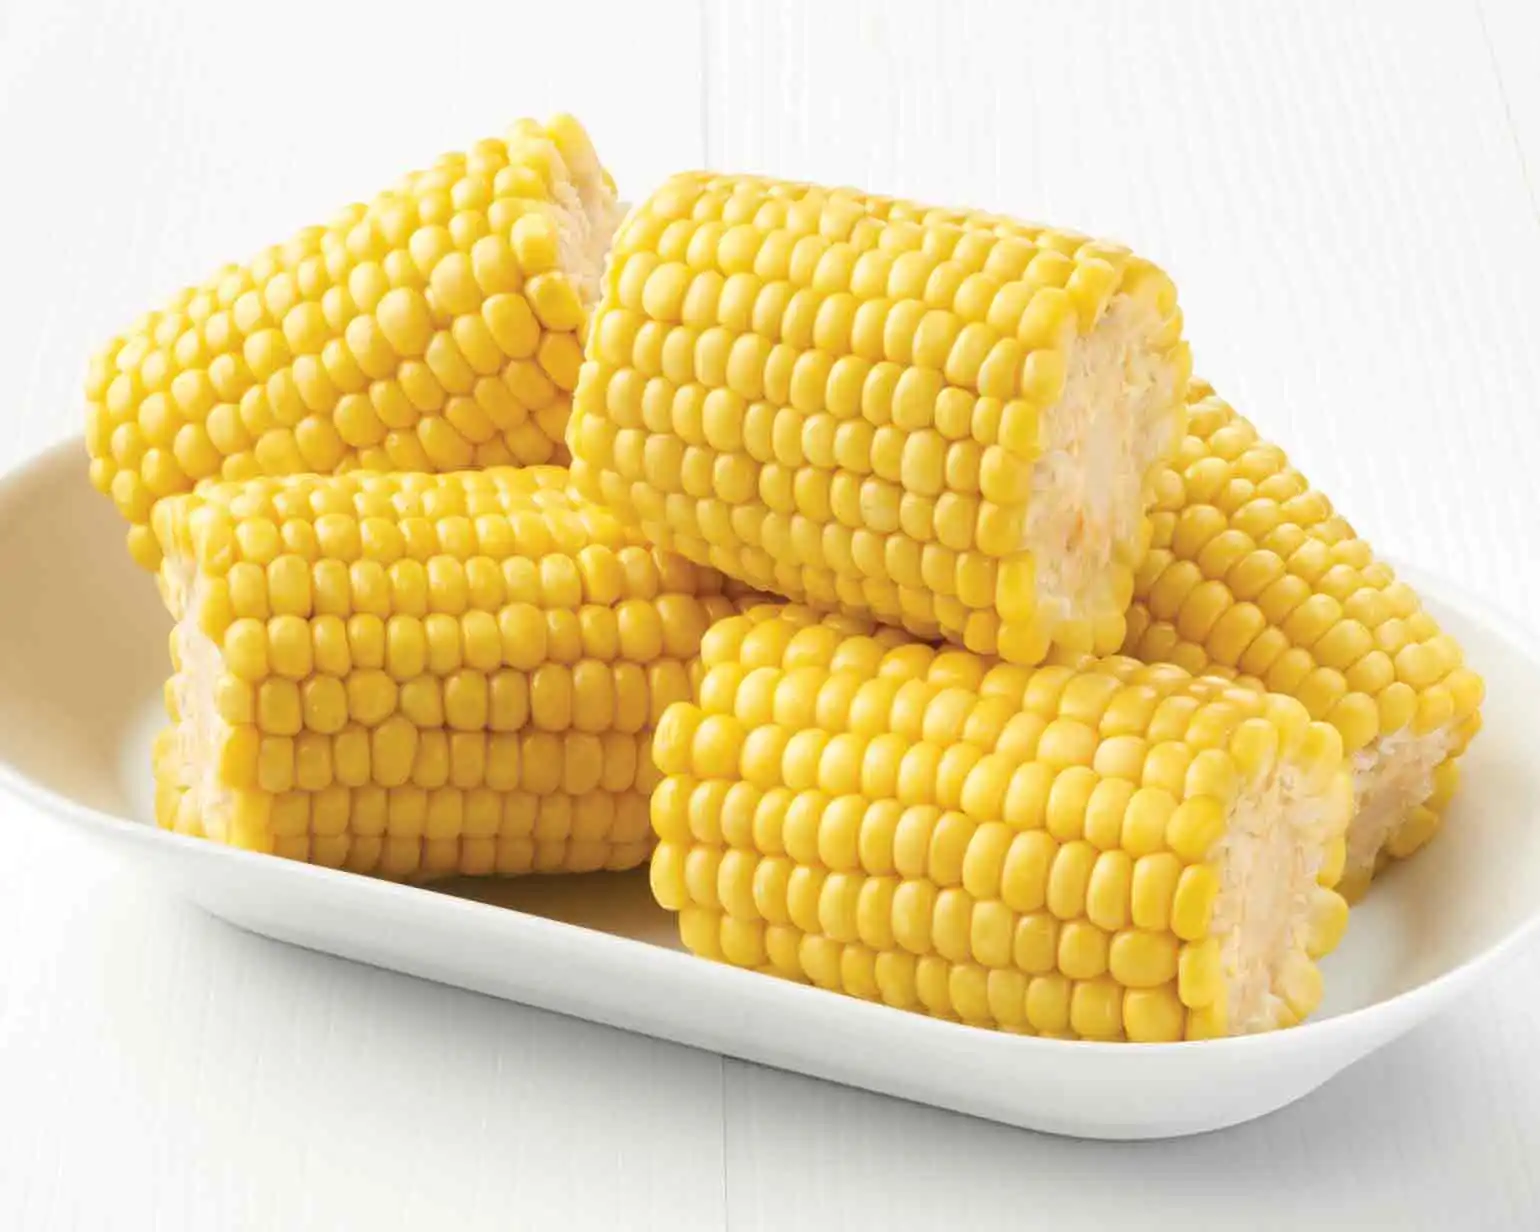 Großhandels preis Gelber Mais Hochwertiger gelber Mais Mais für Tierfutter lieferanten